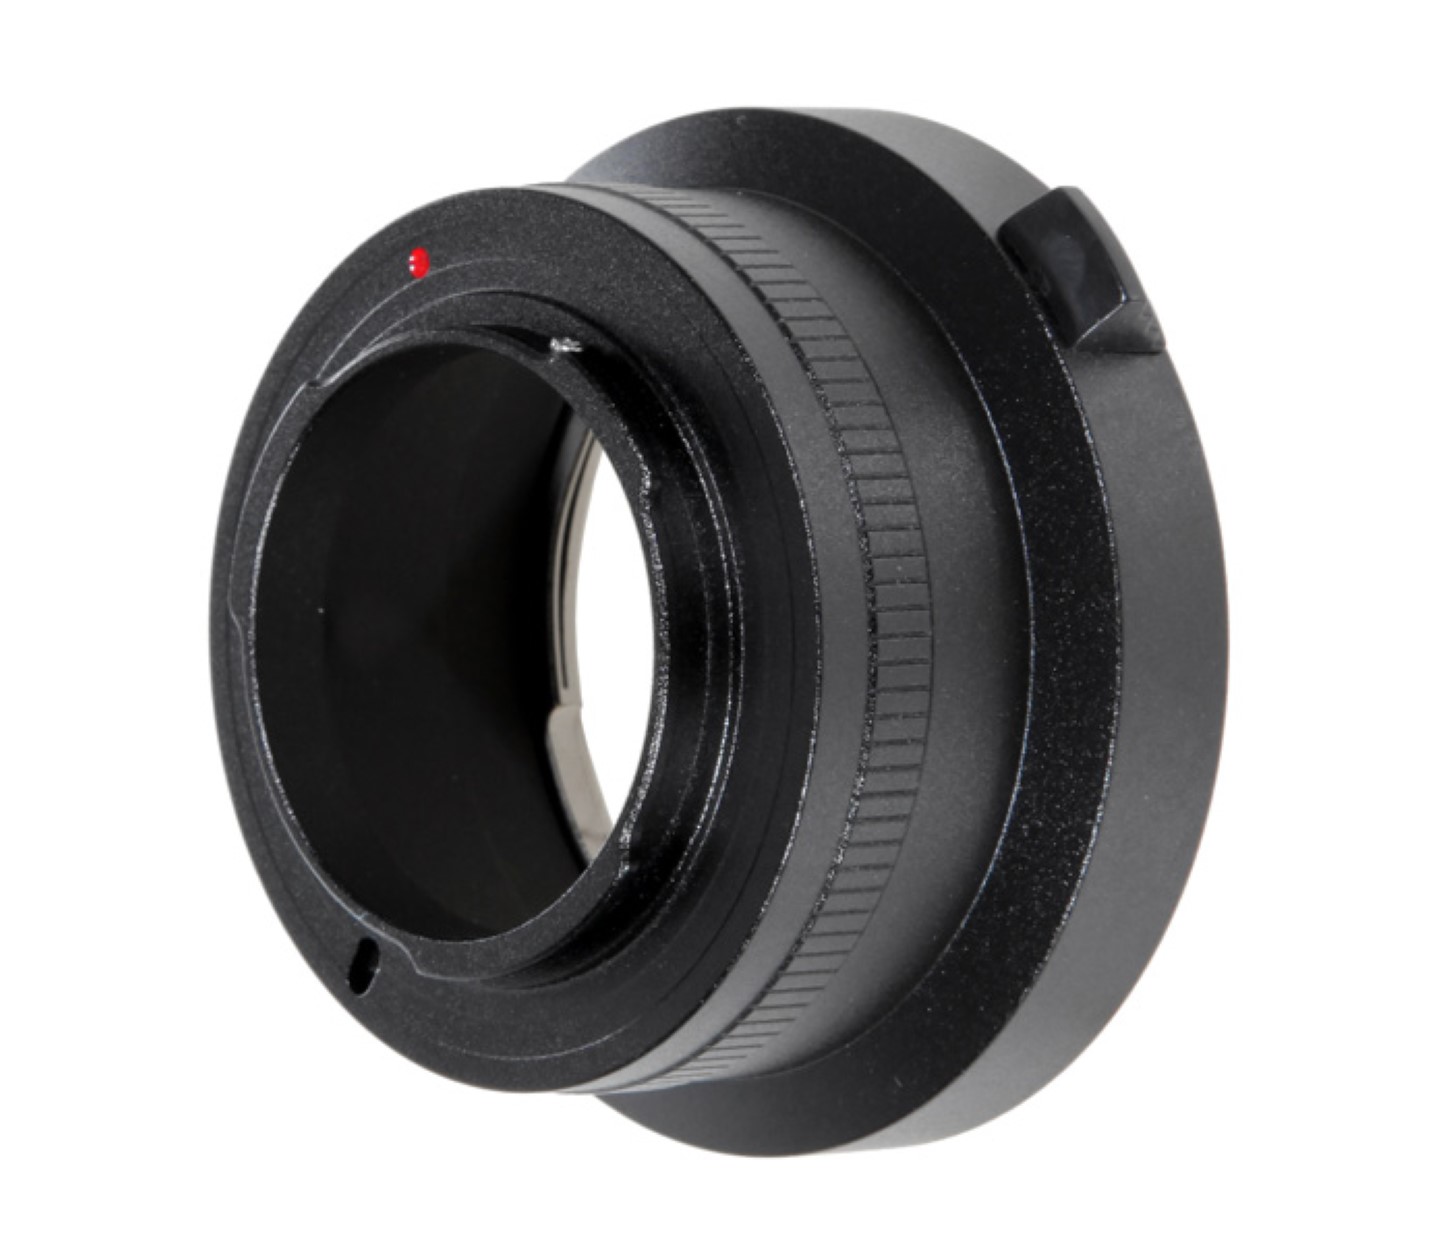 Objektivadapter für Pentax Objektive an Nikon 1 Kameras